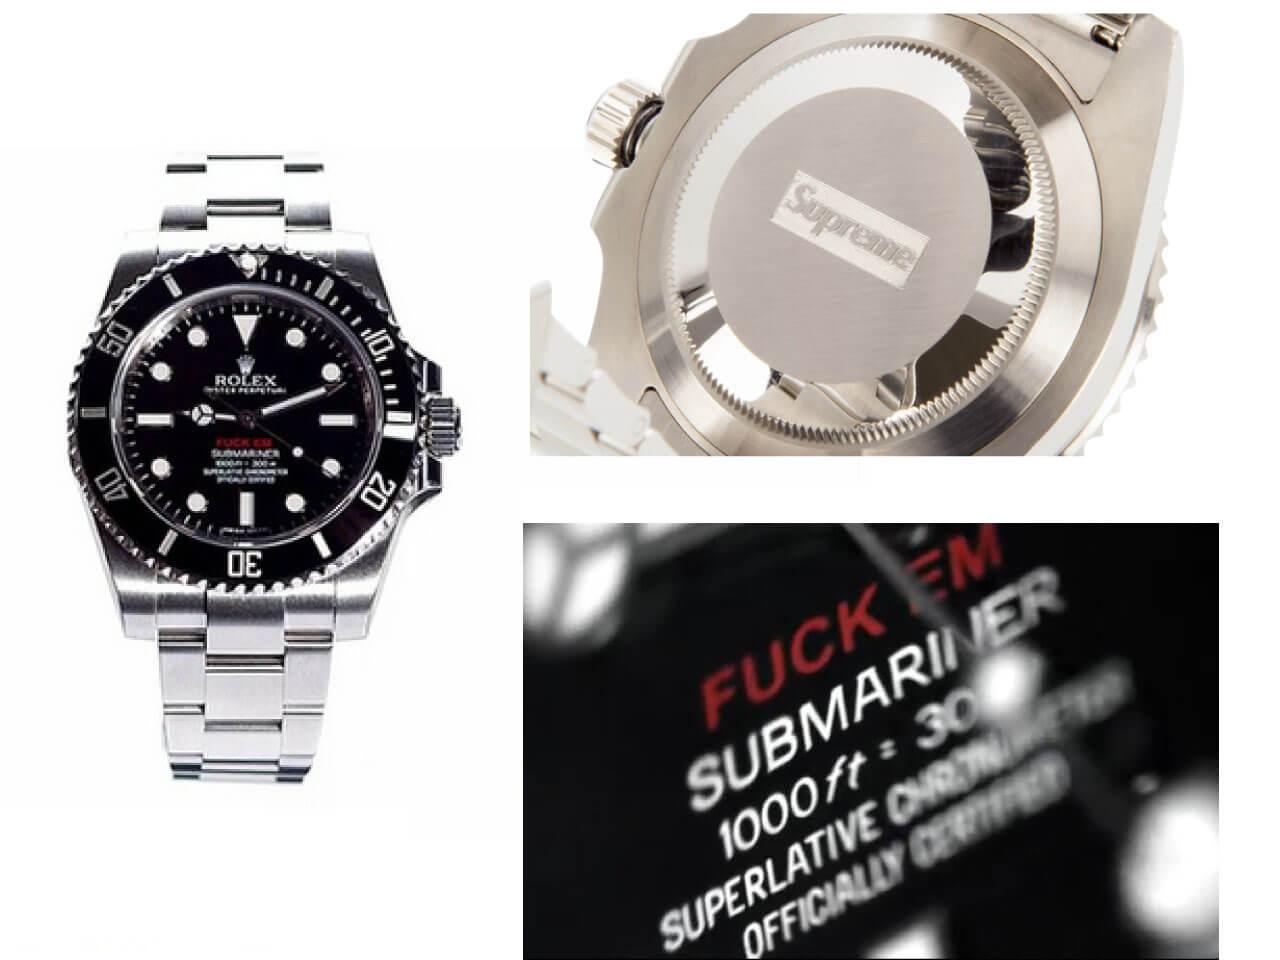 Supreme（シュプリーム）の2013年の春夏ルックブックに、Rolex (ロレックス)とのコラボ腕時計が突如登場